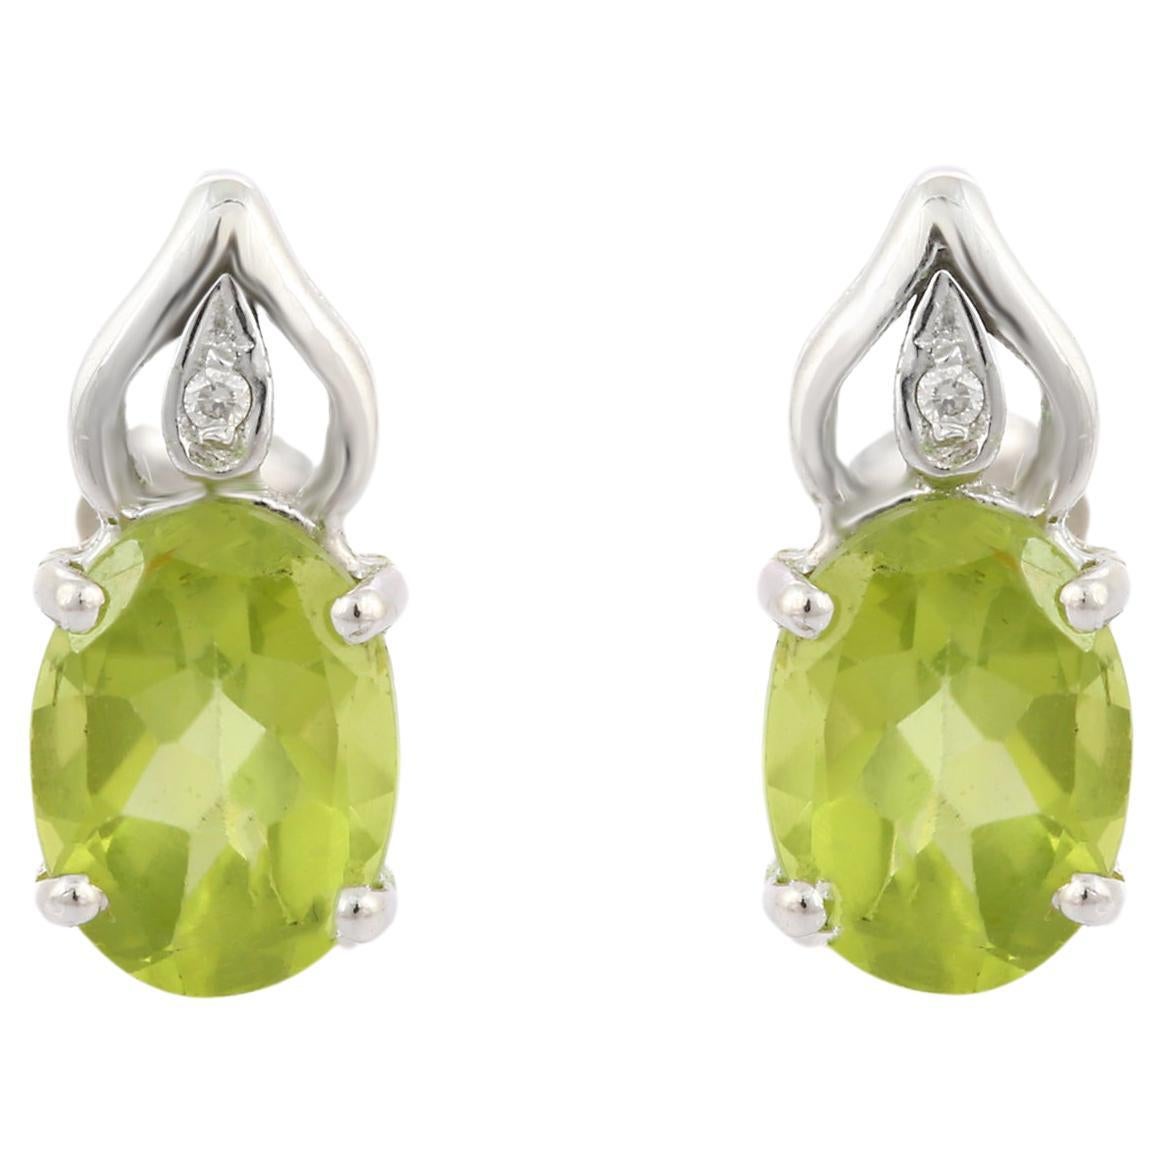 Green Oval Peridot Gemstone Stud Earrings with Diamonds in 14K White Gold 